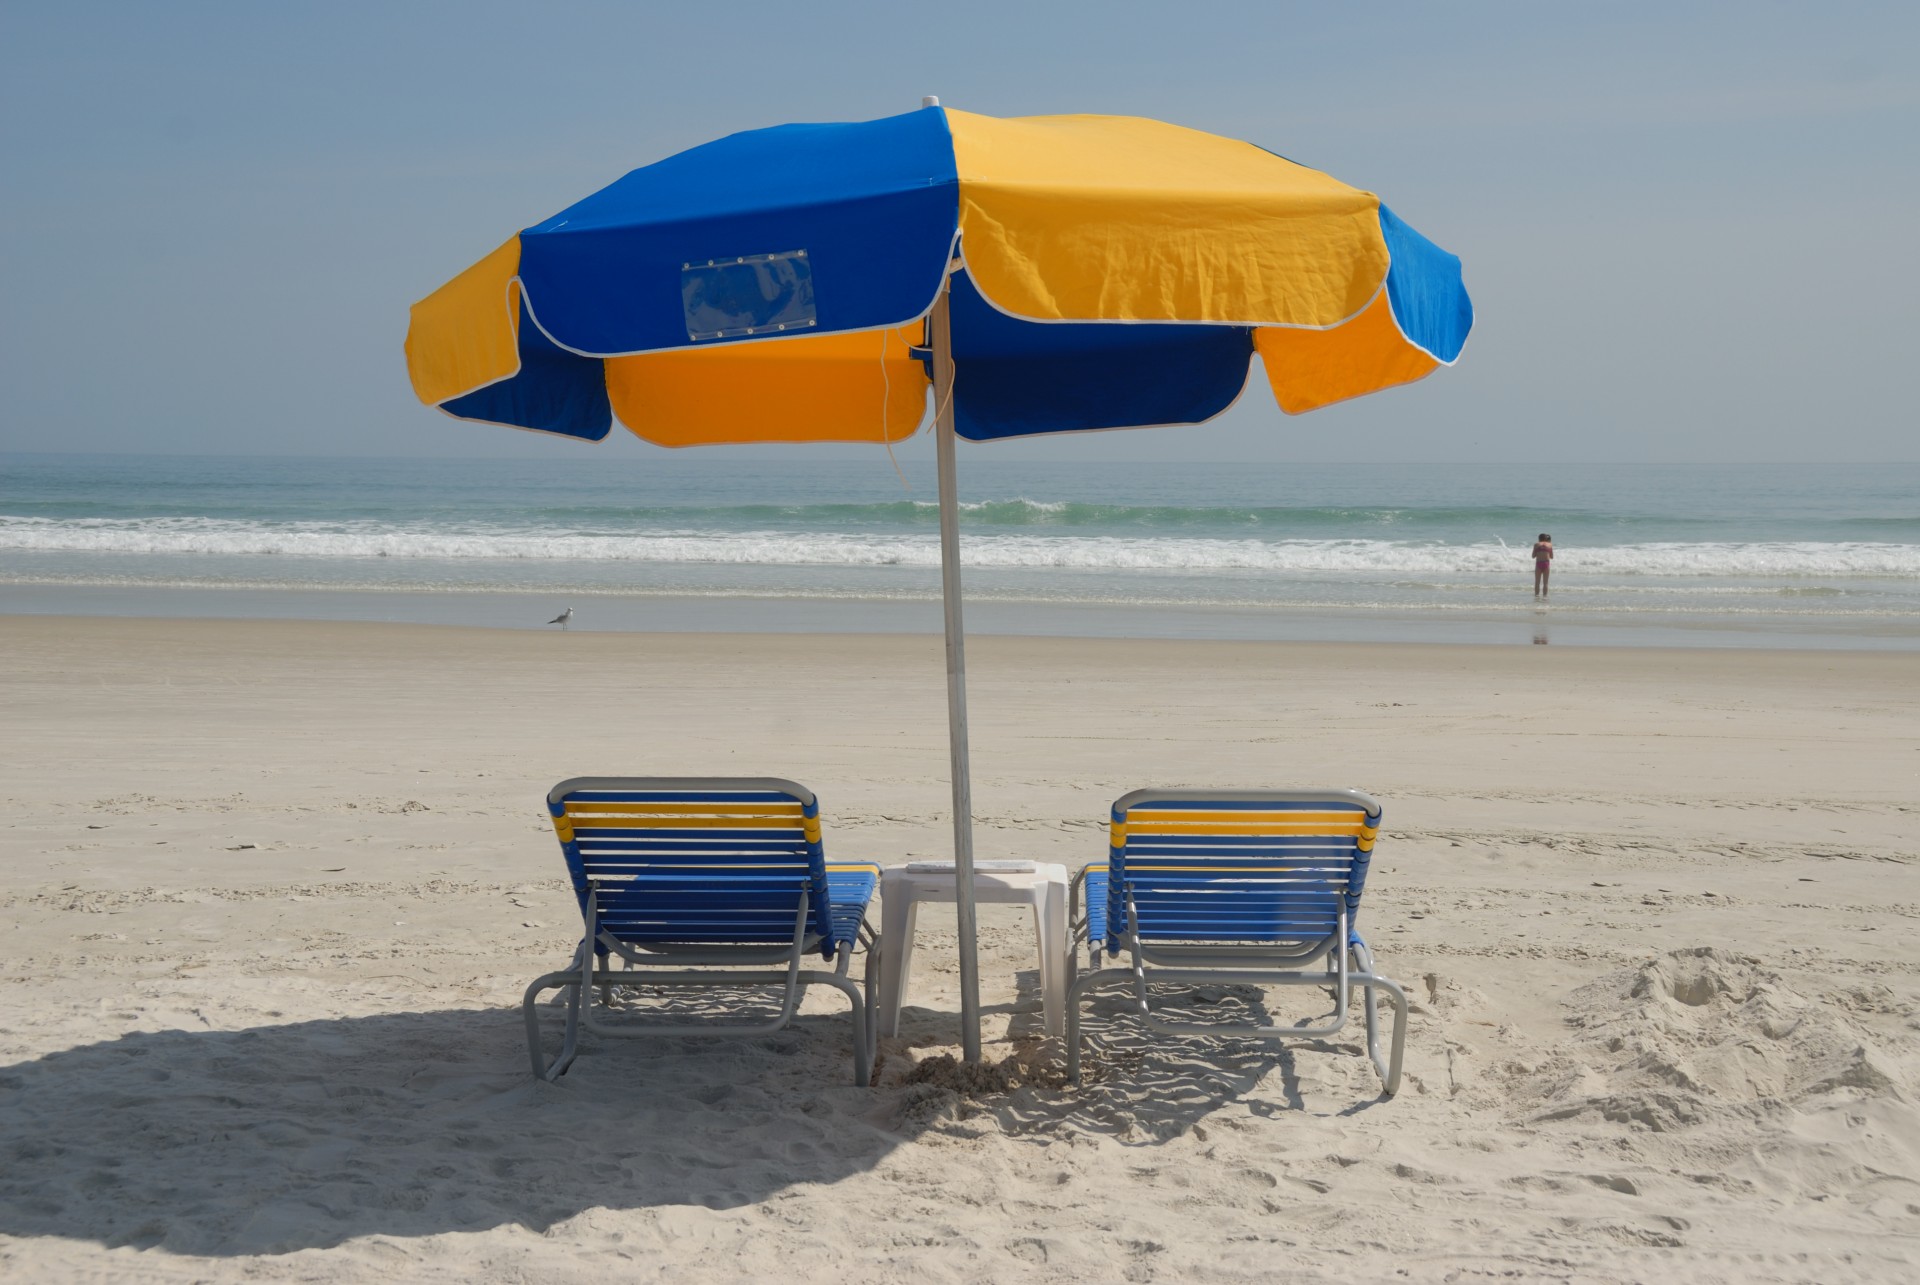 Empty Nobody Beach Chairs Umbrella Free Image From Needpix Com